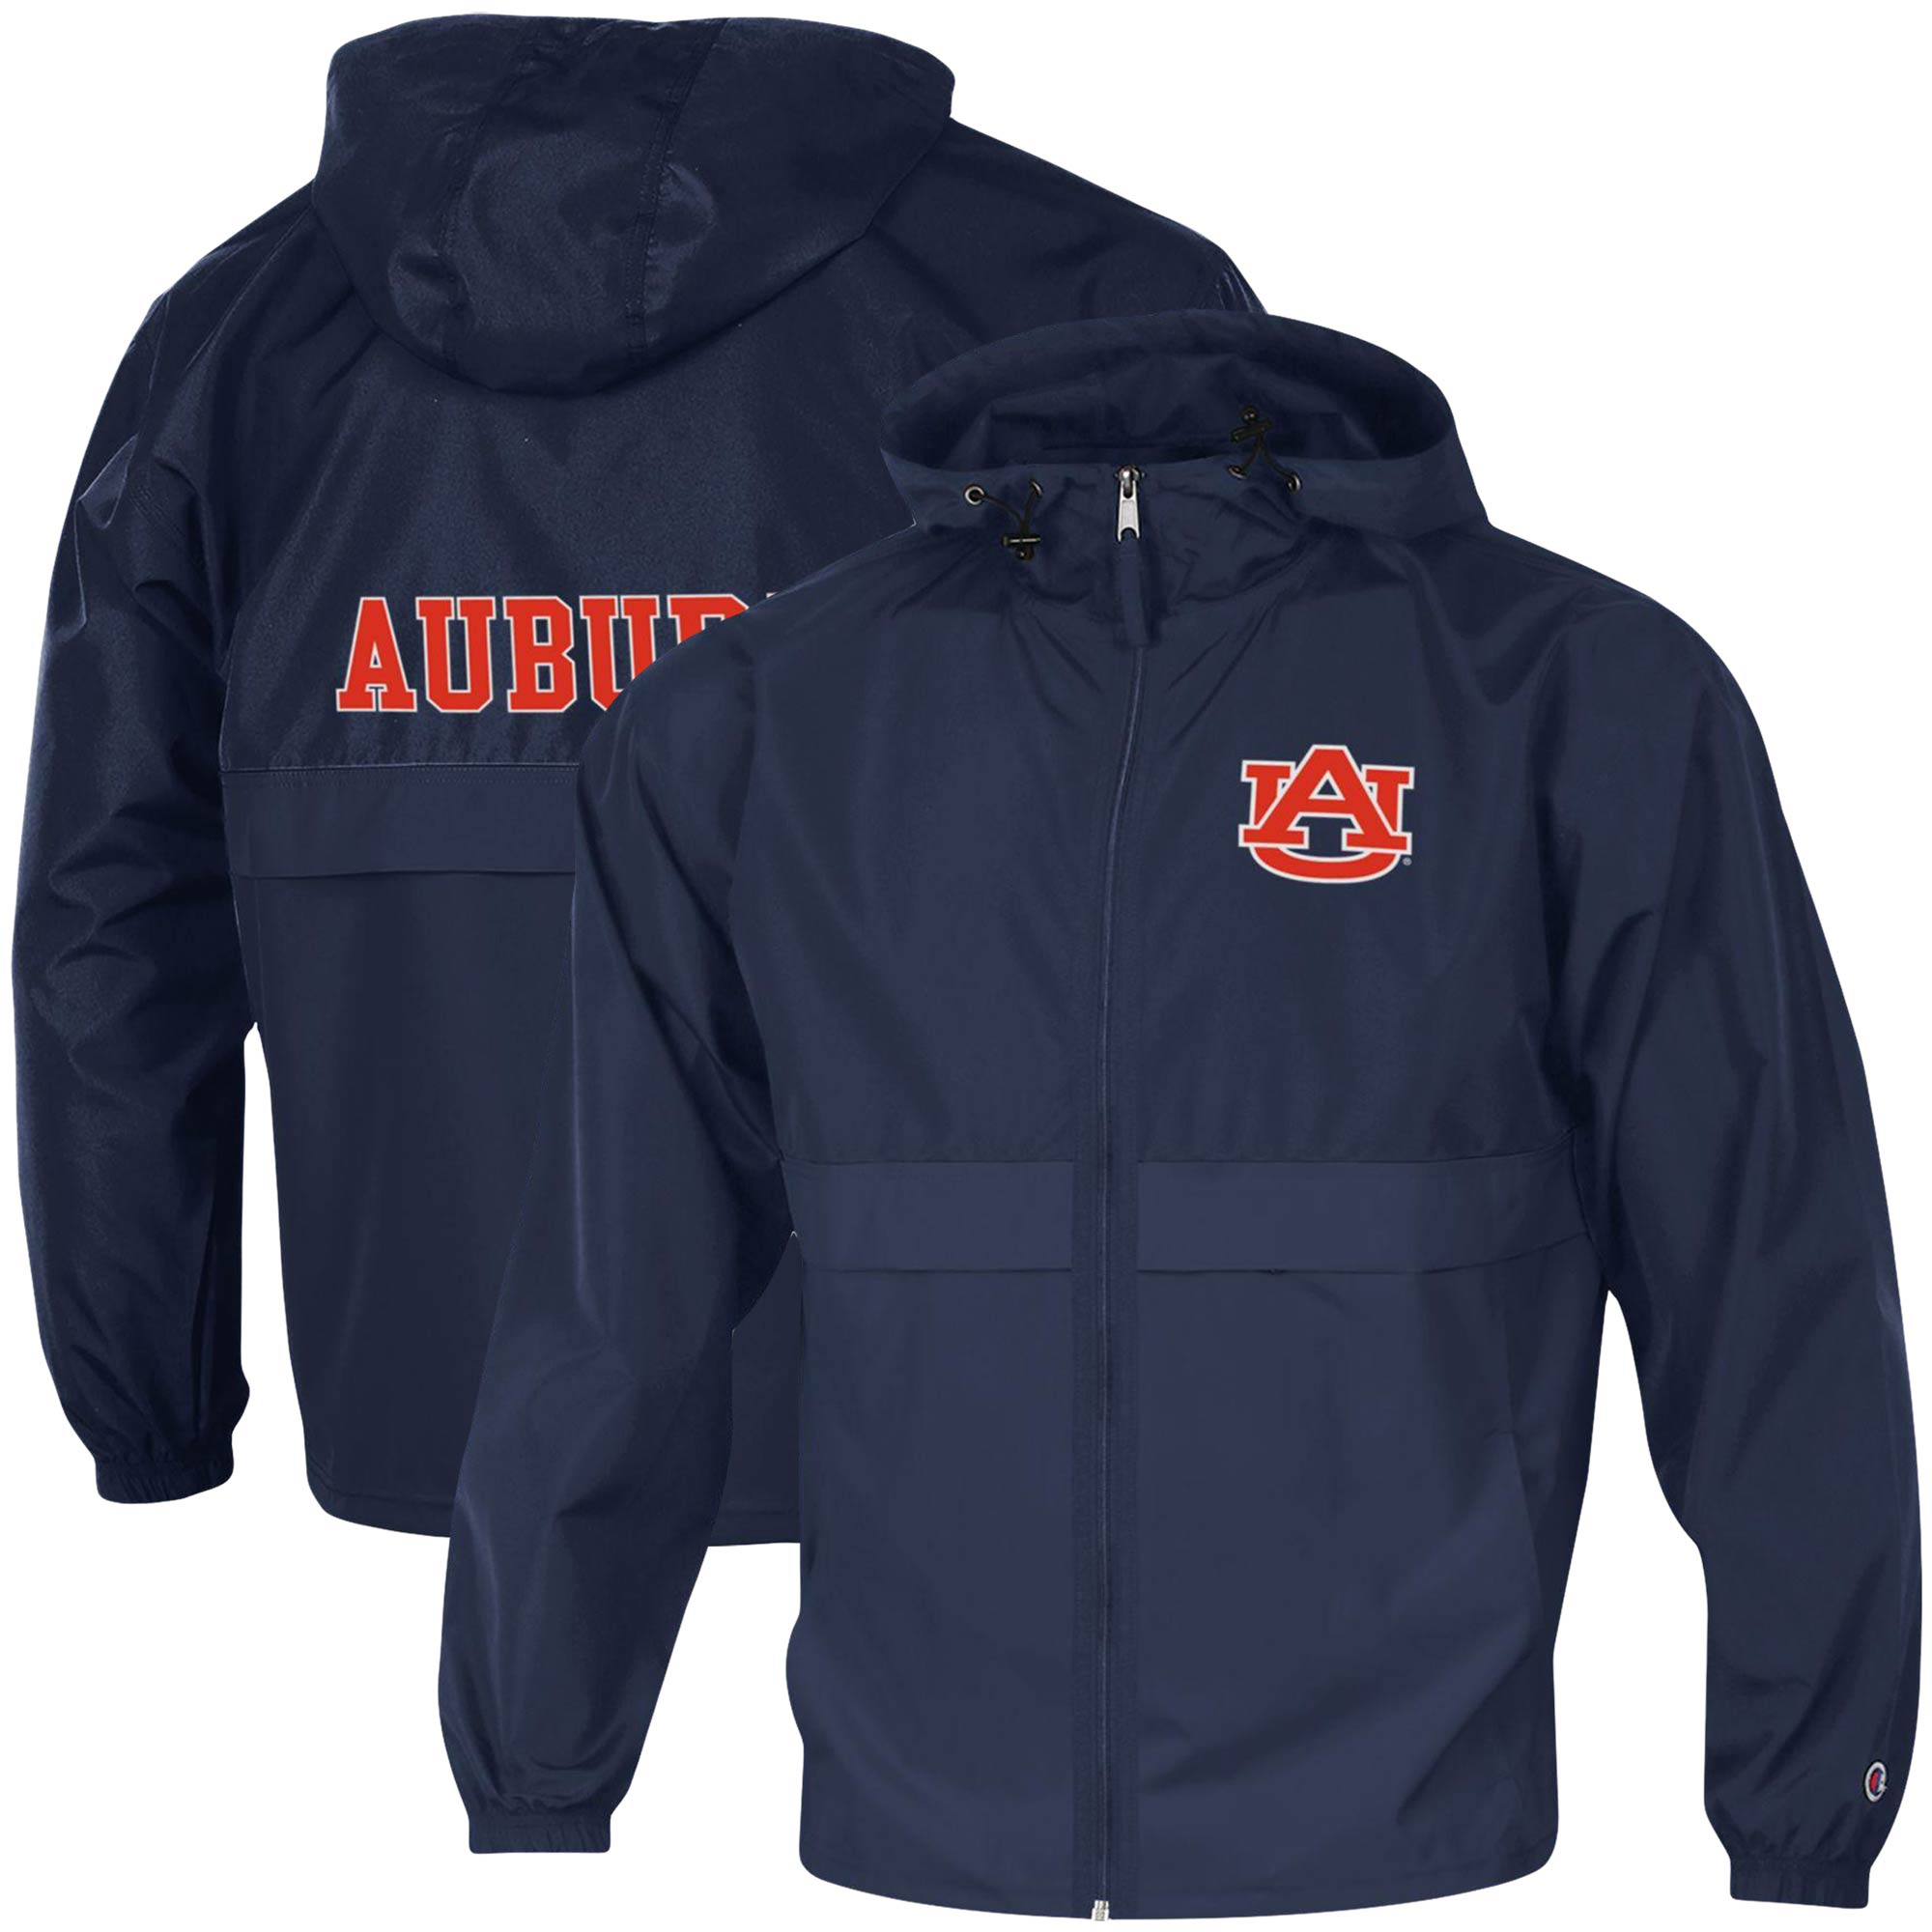 Auburn Team Lightweight Full-Zip Jacket | Foot Locker